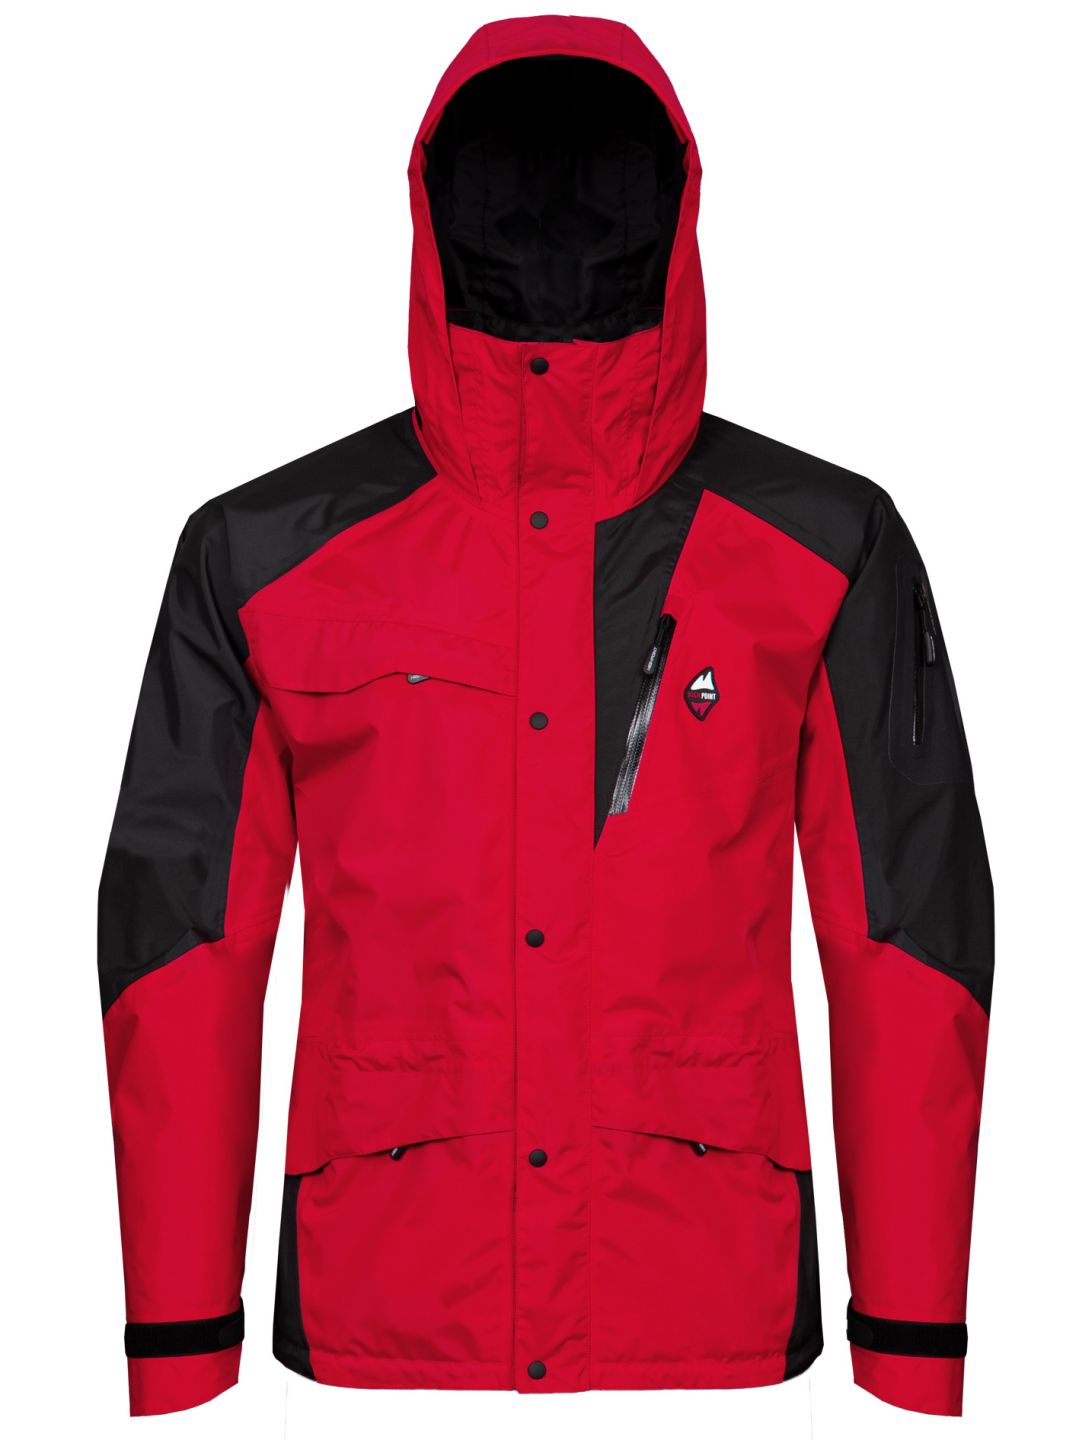 HIGH POINT MANIA 7.0 jacket red/black varianta: XL